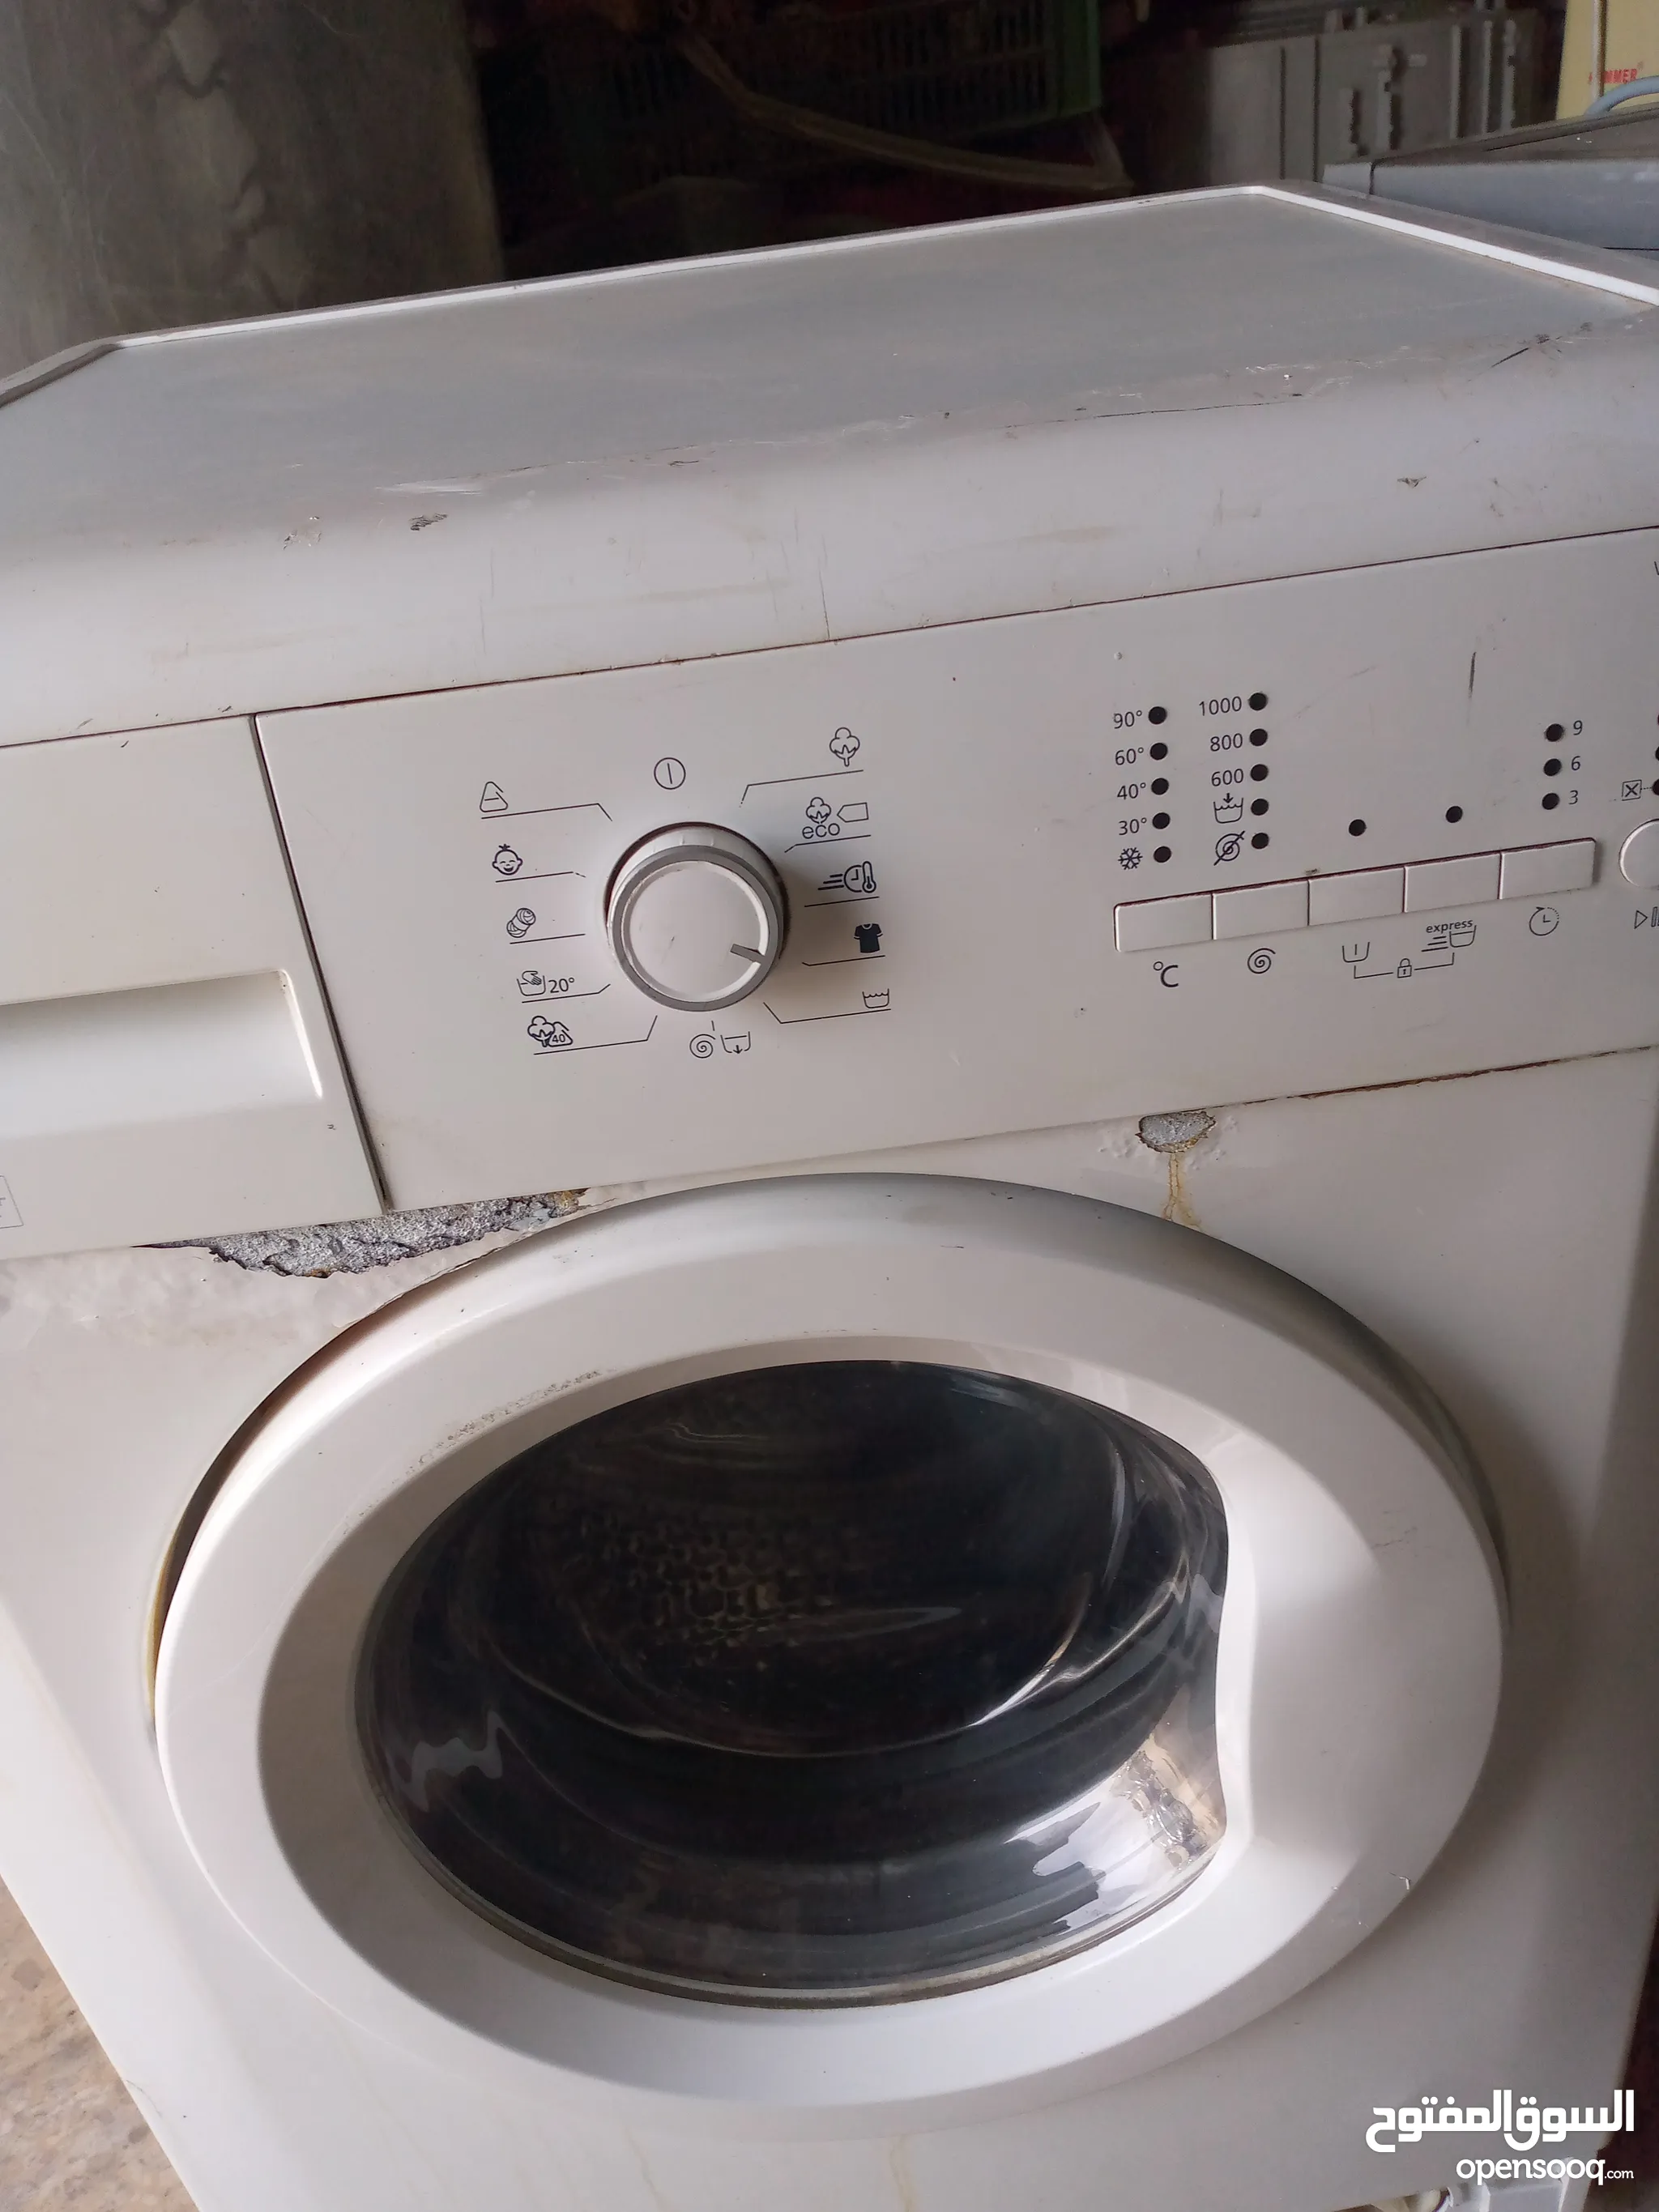 Washing machines : Dryers for Sale : Best Quality : Tripoli | OpenSooq